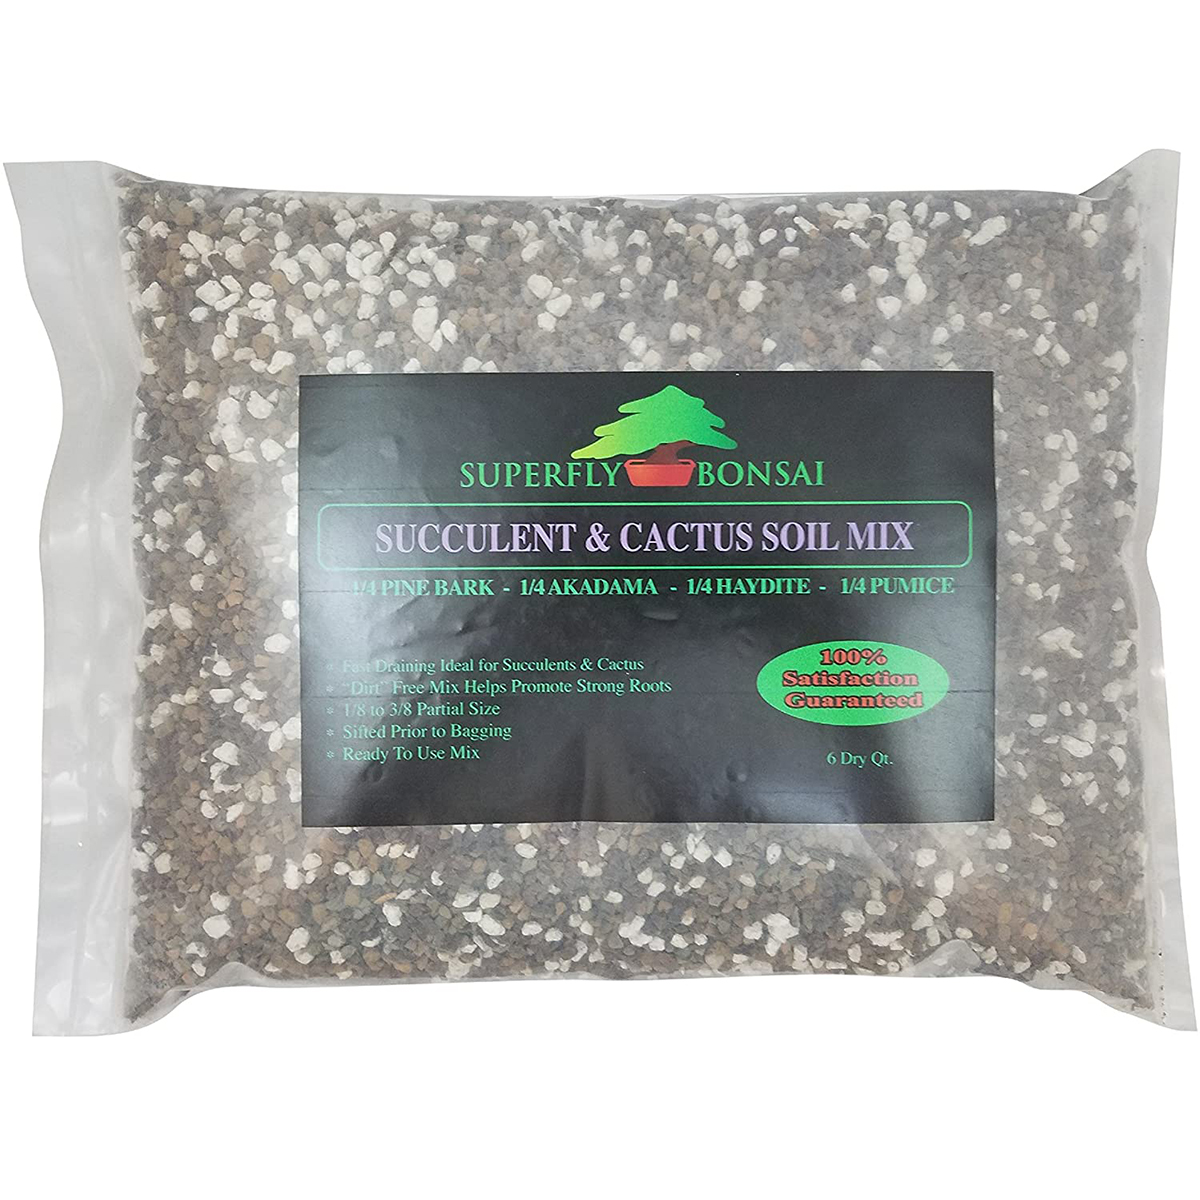 Superfly Bonsai Succulent u0026 Cactus Soil Mix